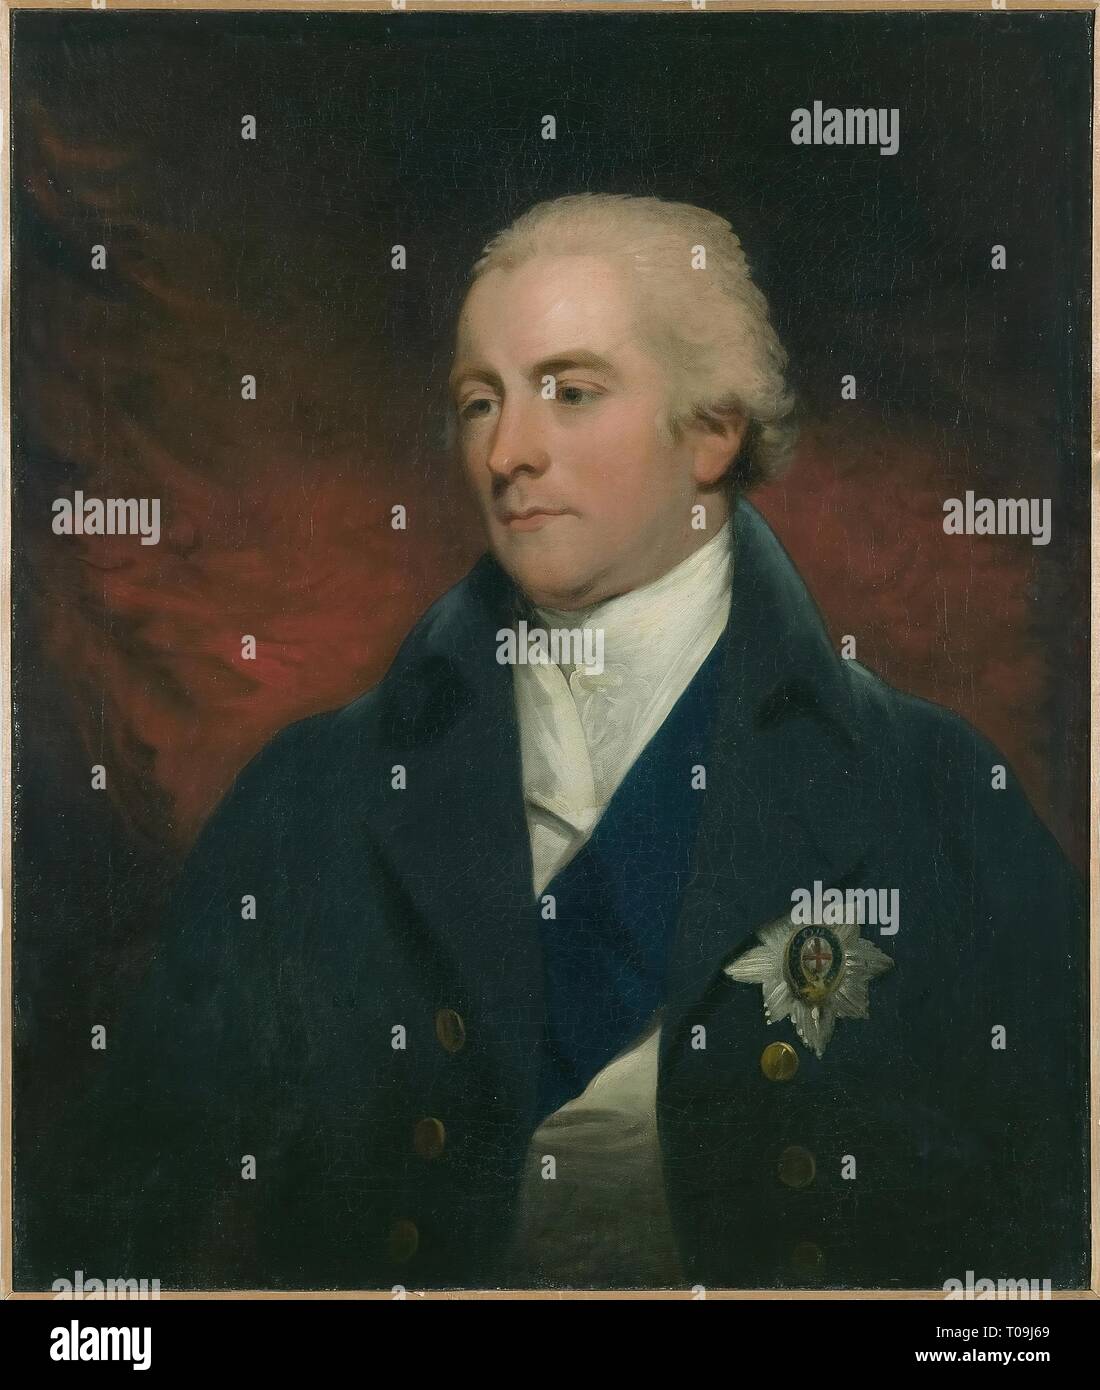 'Portrait of George John, 2nd Earl Spencer (1758-1834)'. Great Britain, 1802. Dimensions: 77x64 cm. Museum: State Hermitage, St. Petersburg. Author: JOHN HOPPNER. Stock Photo